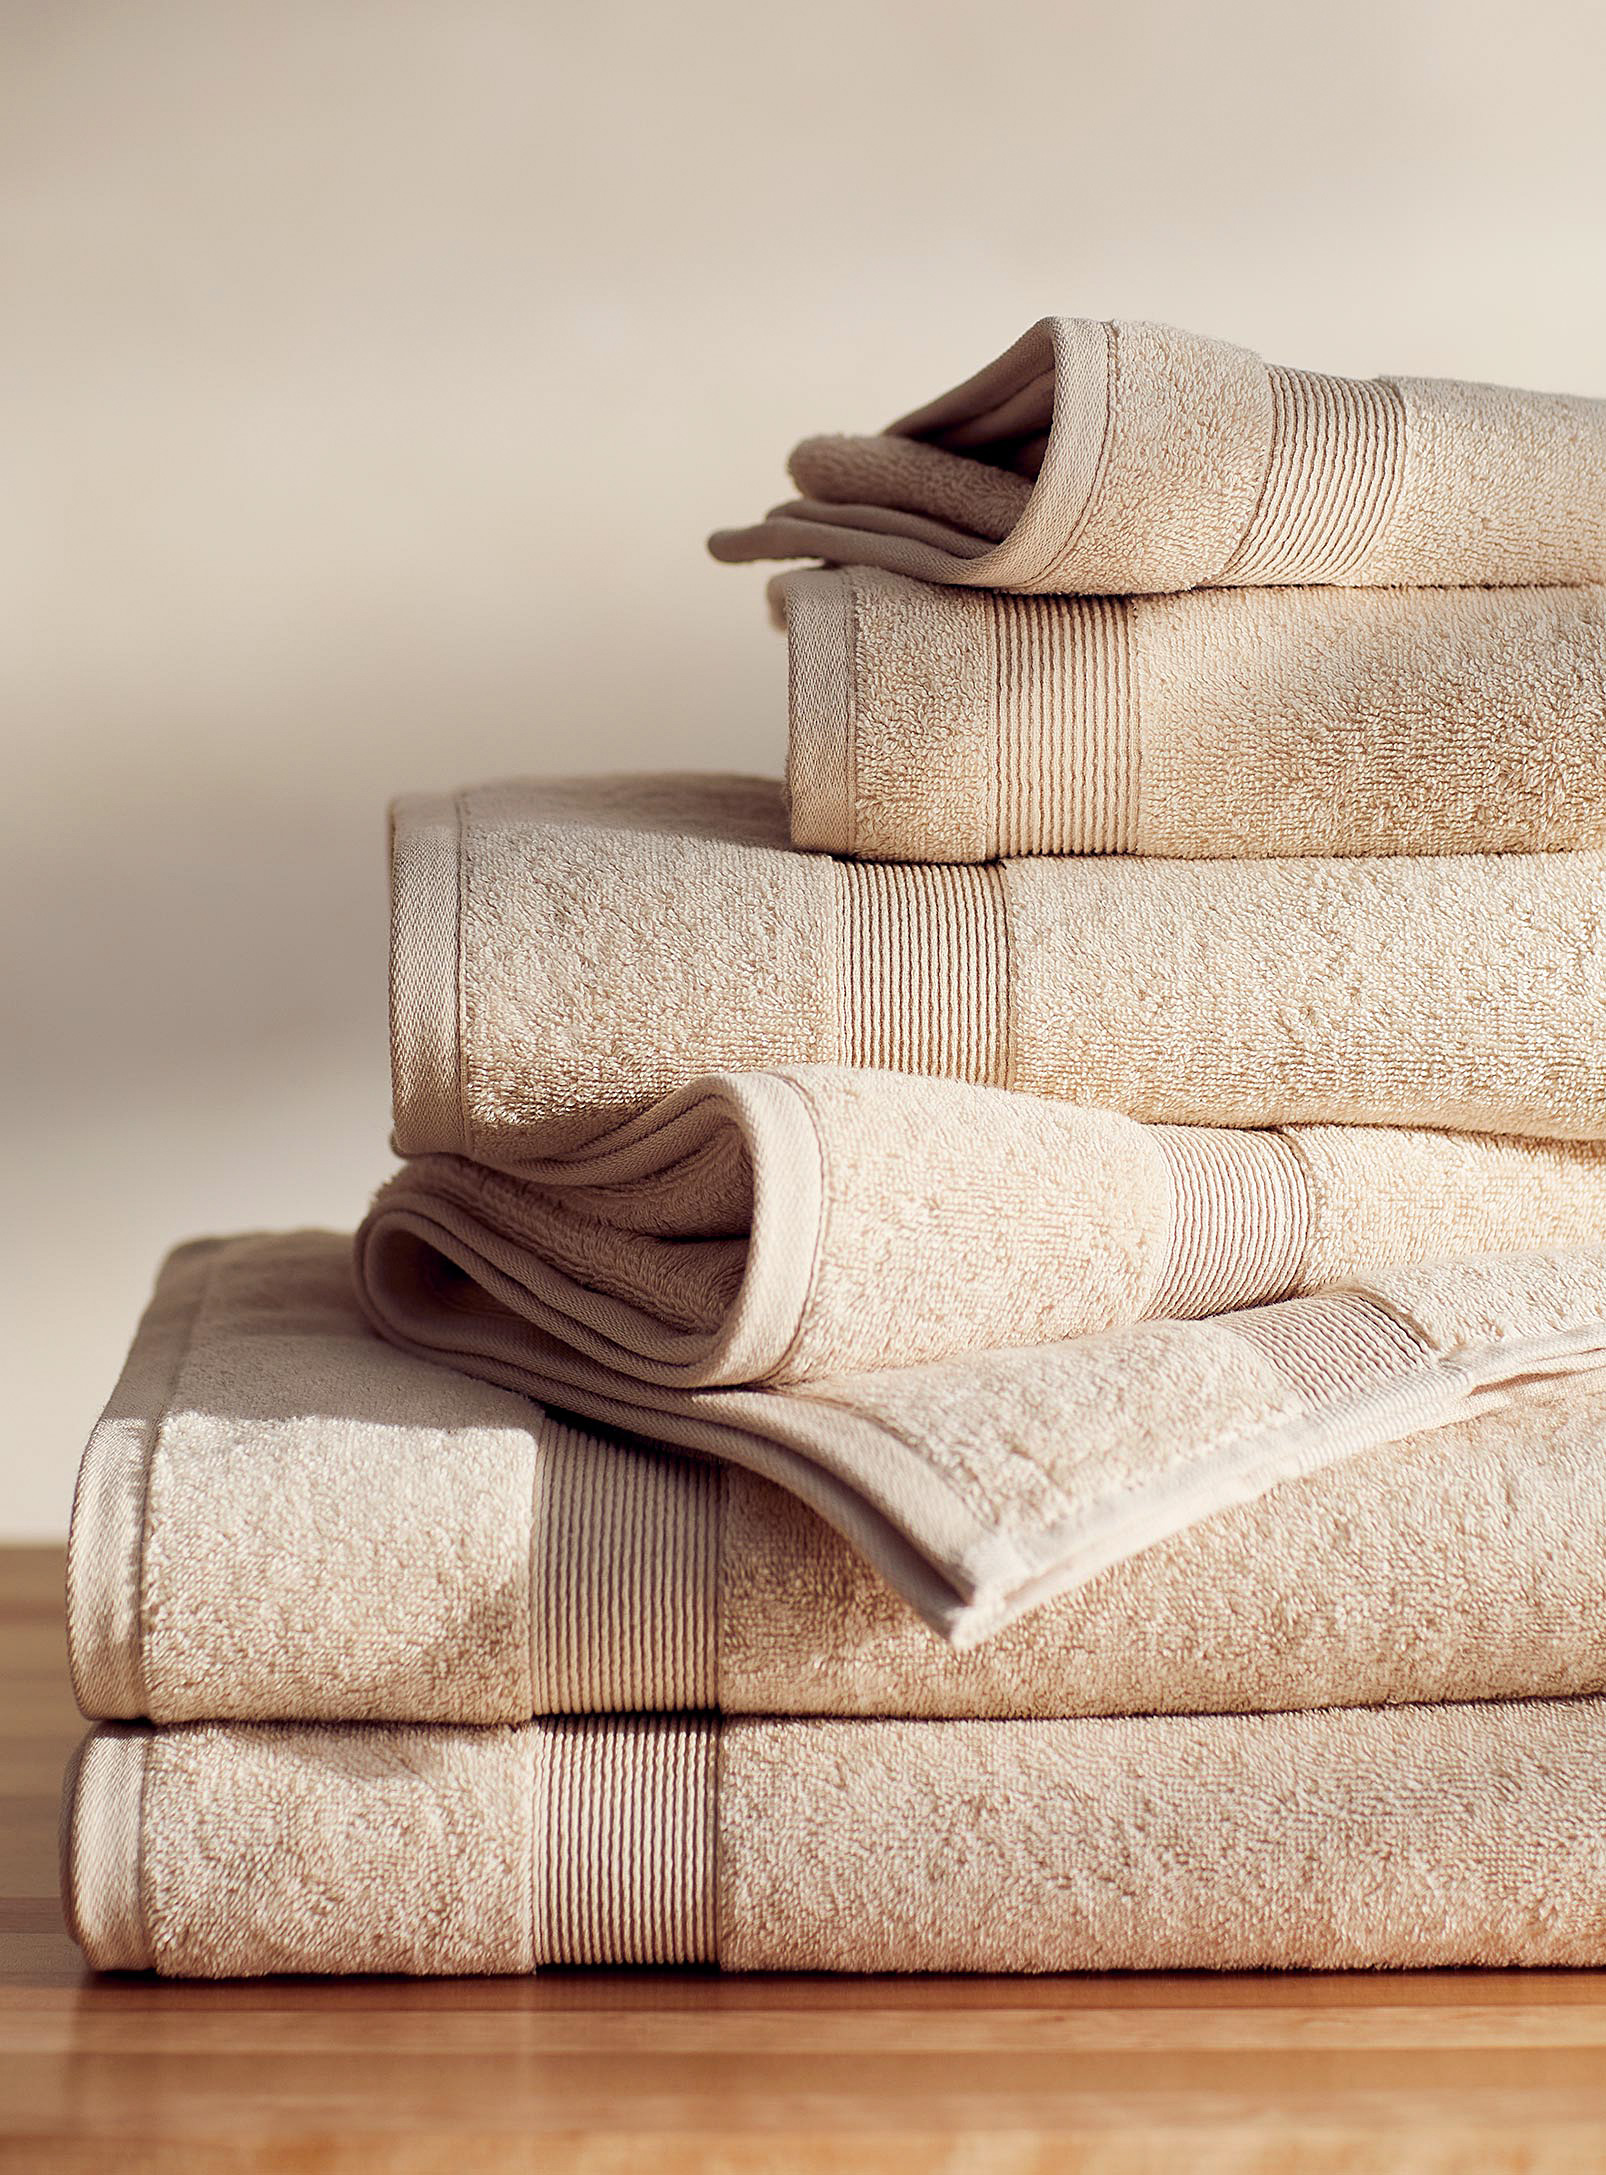 Simons Maison Braided Border Turkish Cotton Towels In Ivory White